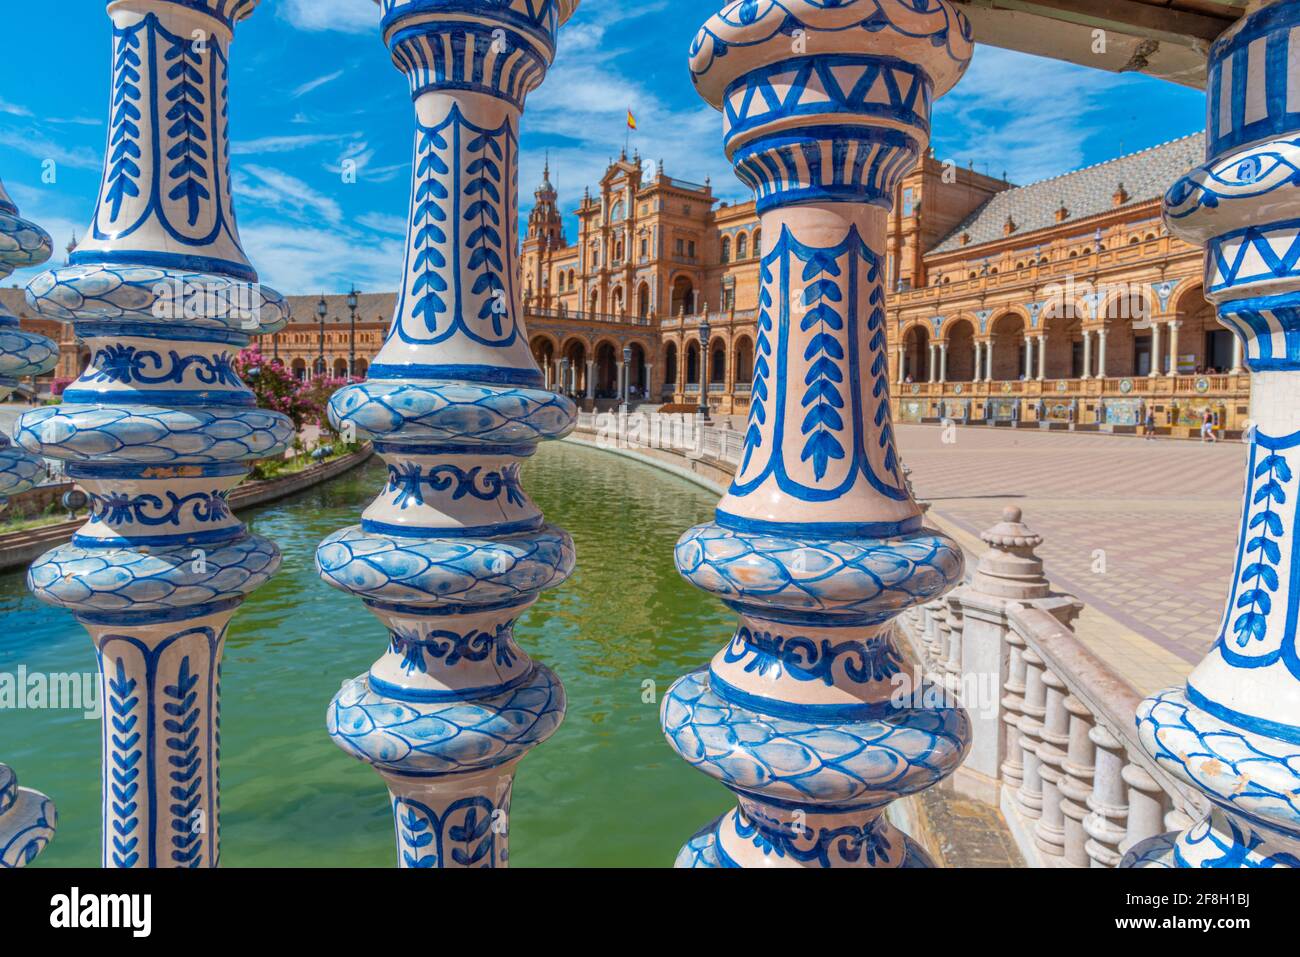 Plaza de Espana viewed through ceramic tiles, Sevilla, Spain Stock Photo